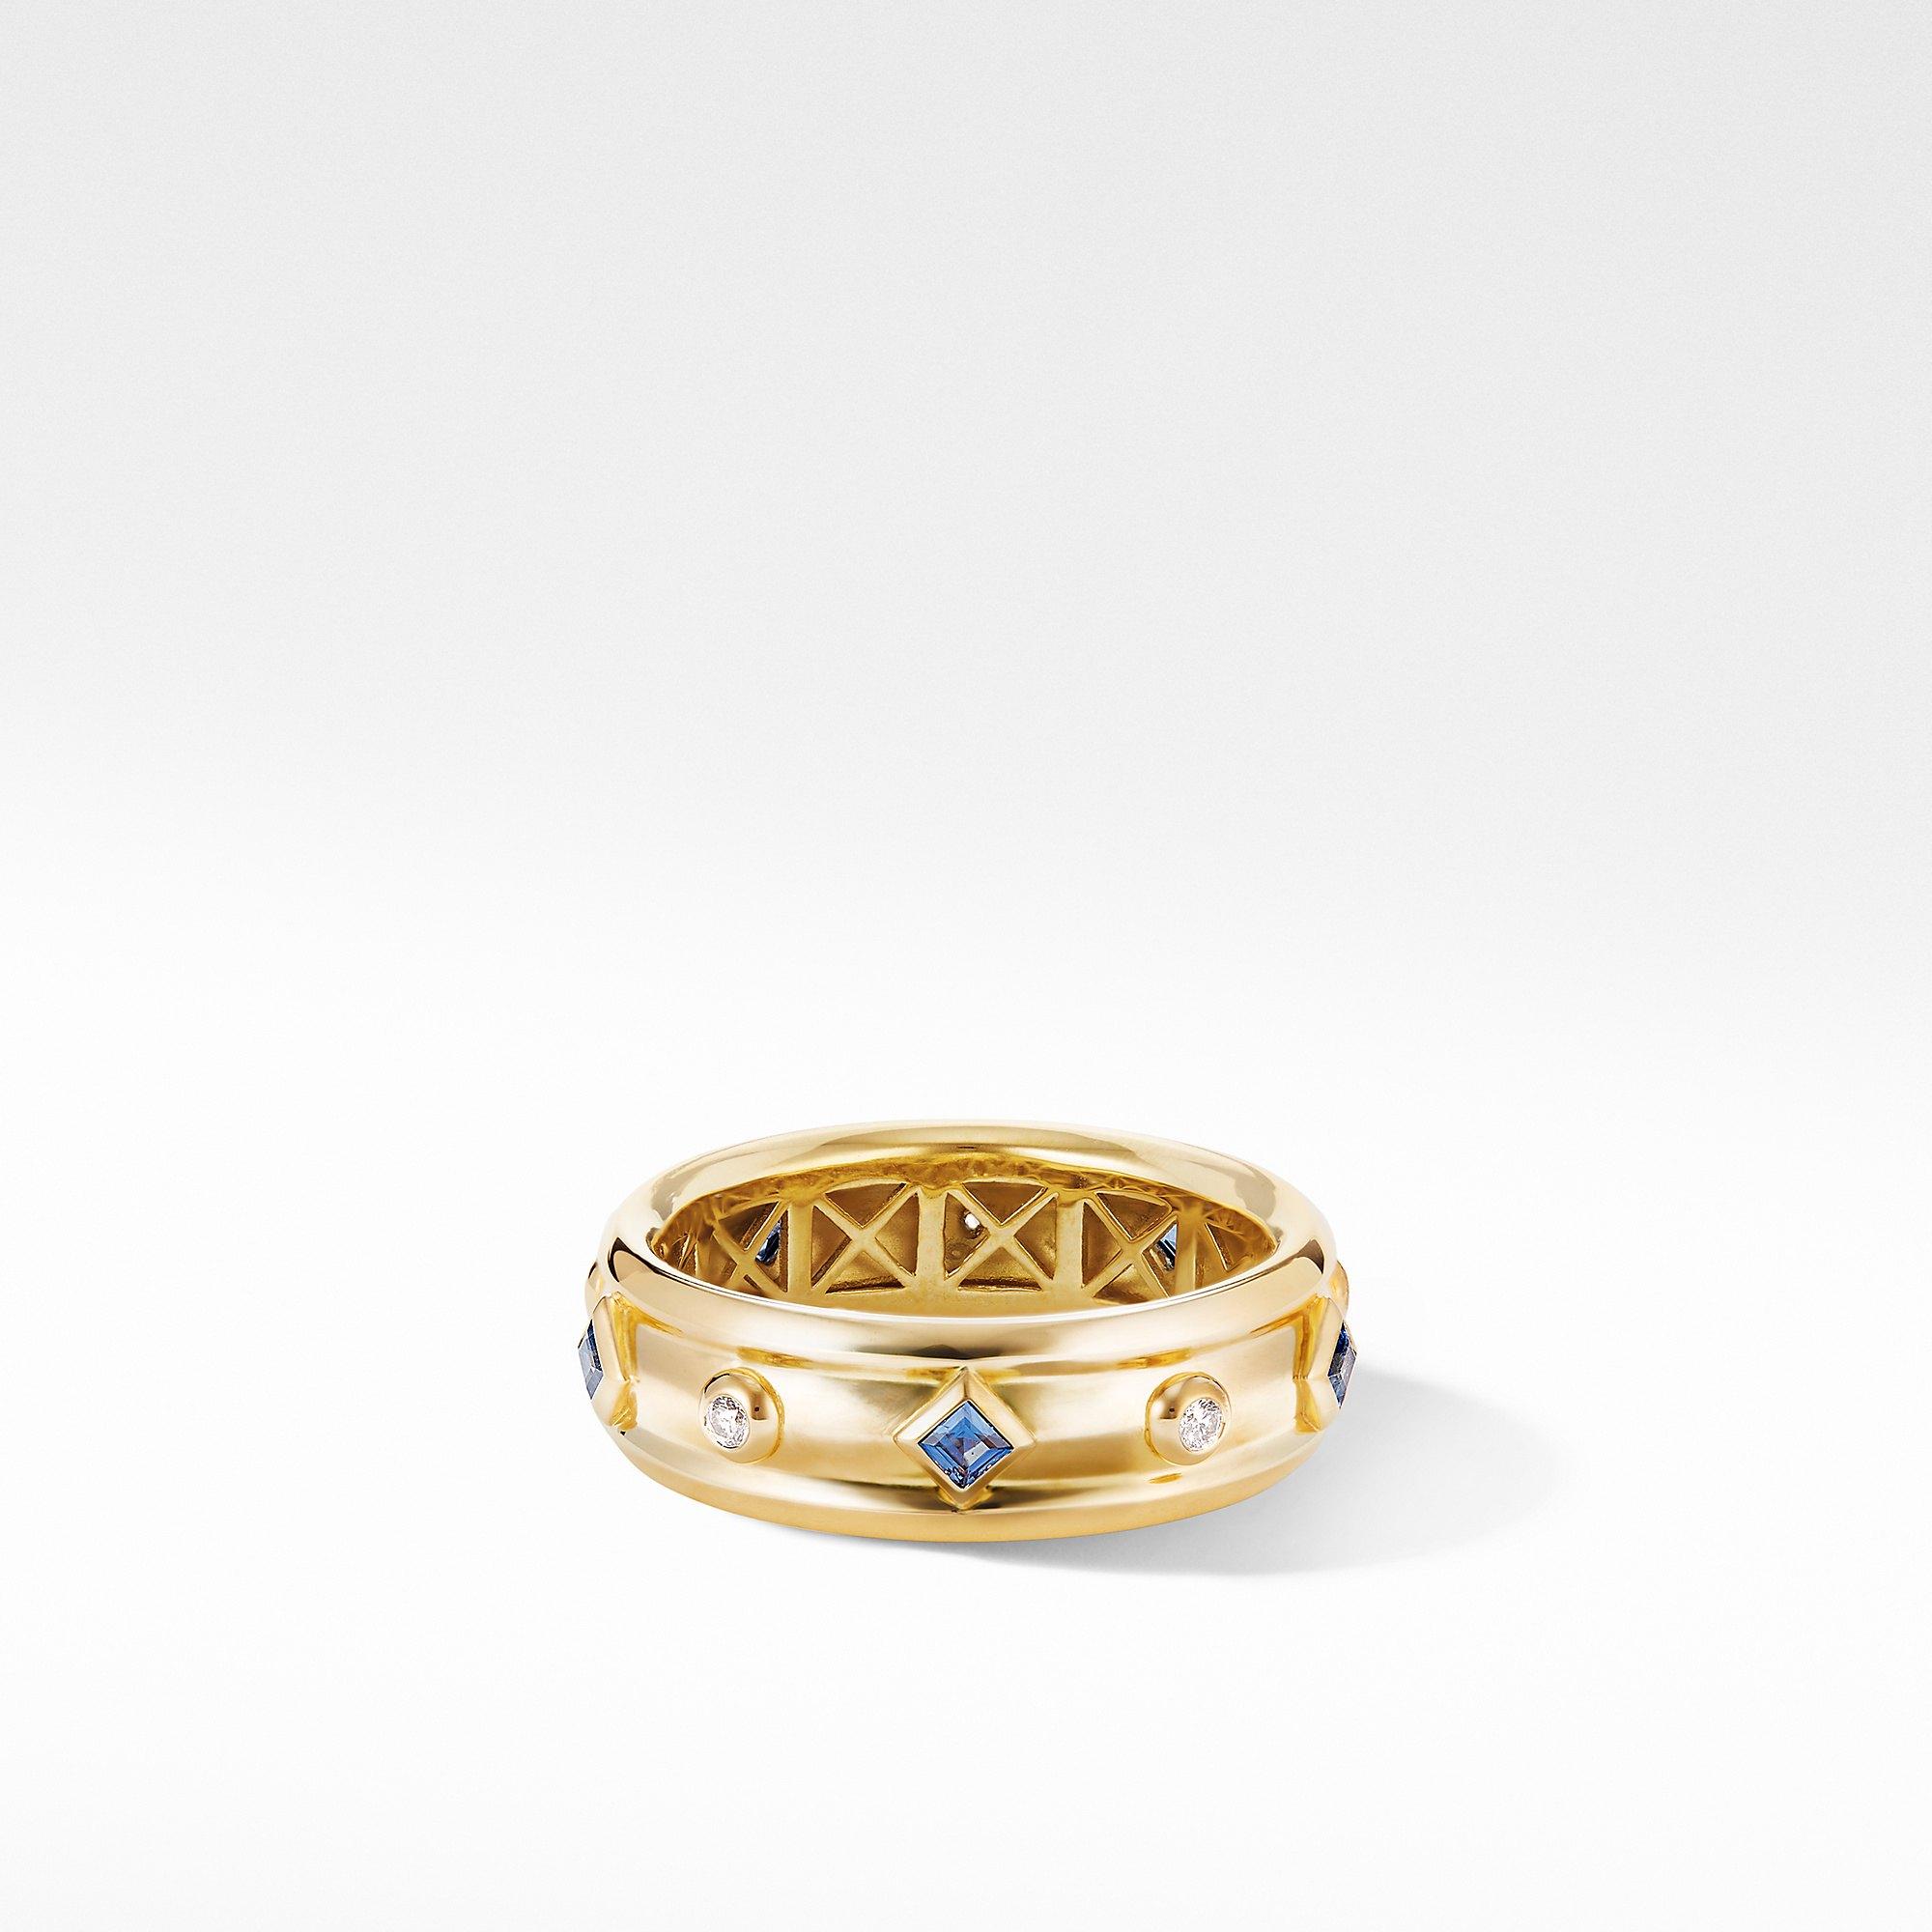 David Yurman Modern Renaissance Ring in 18k Yellow Gold with Blue Sapphires and Diamonds